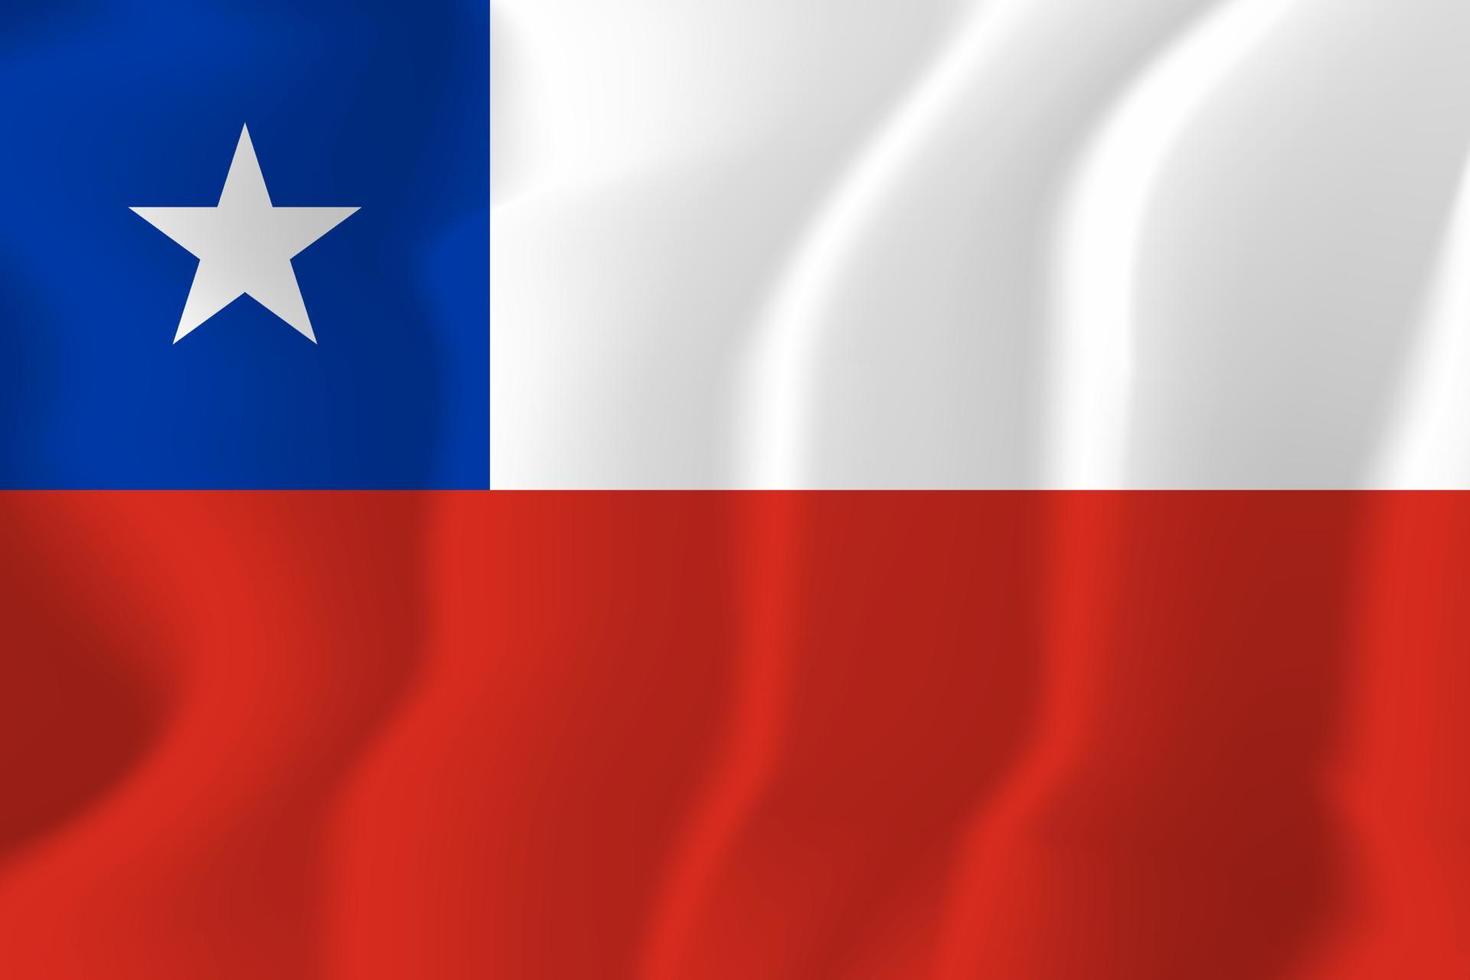 Chile National Flag Waving Background Illustration vector